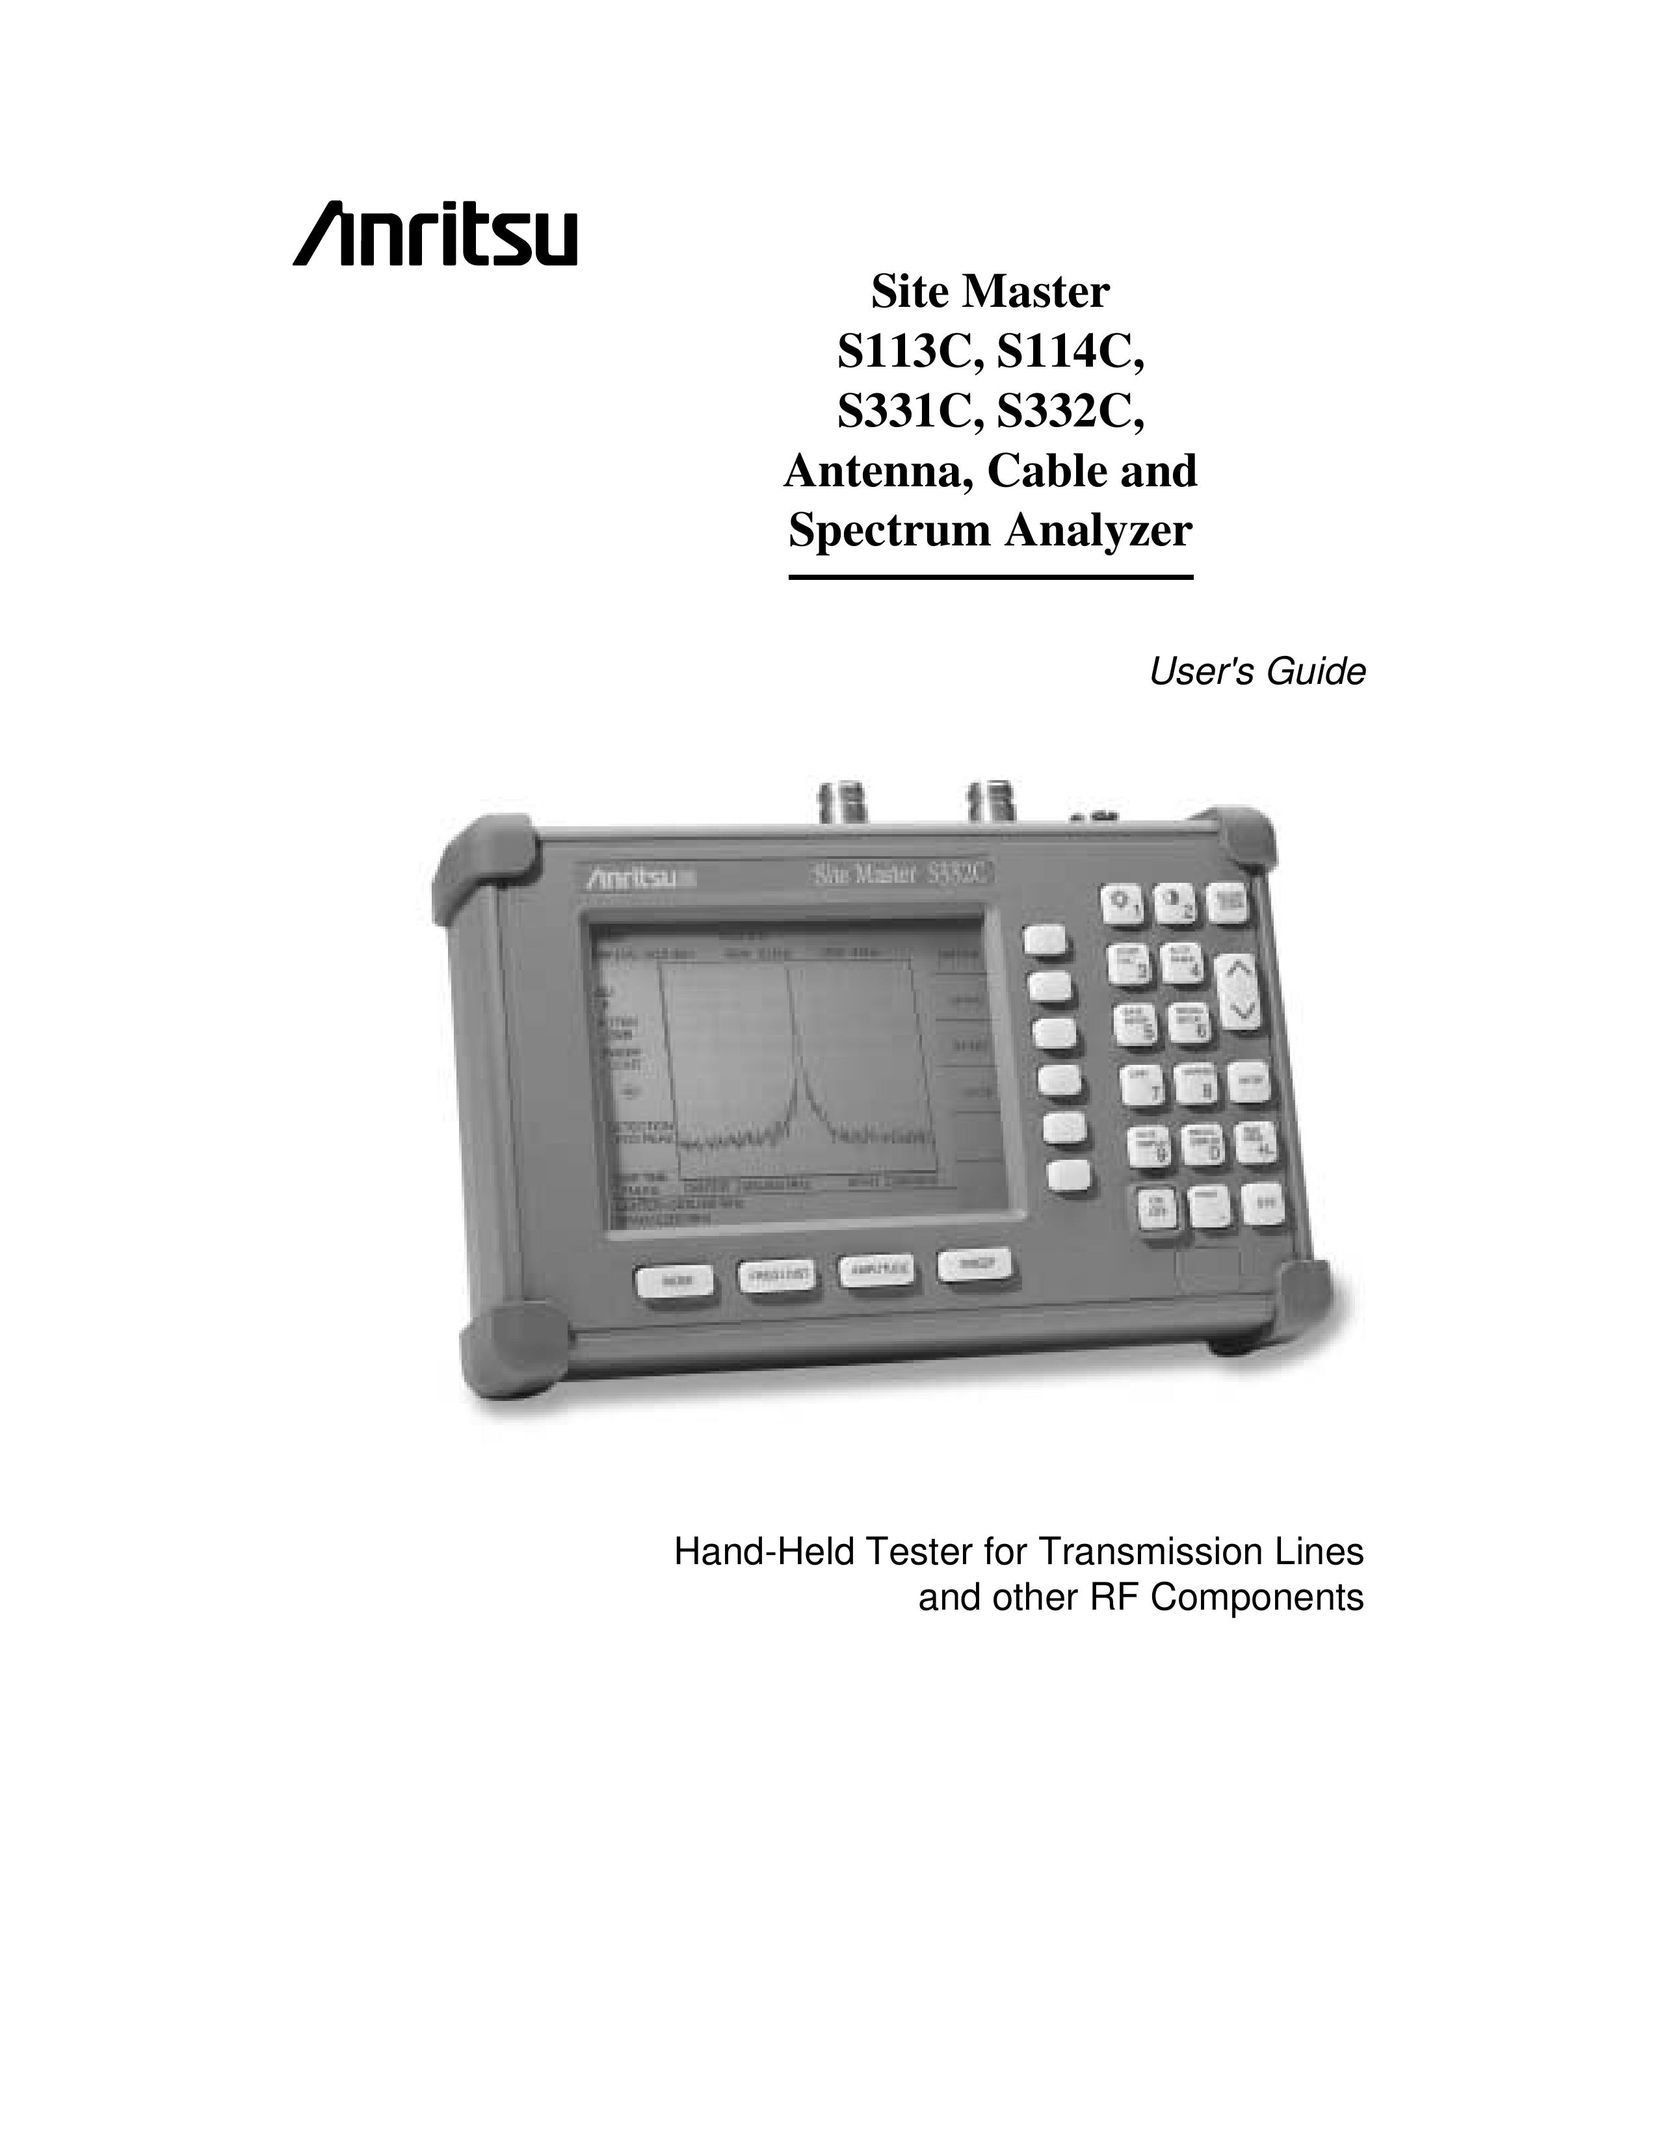 Anritsu S331C Stereo System User Manual